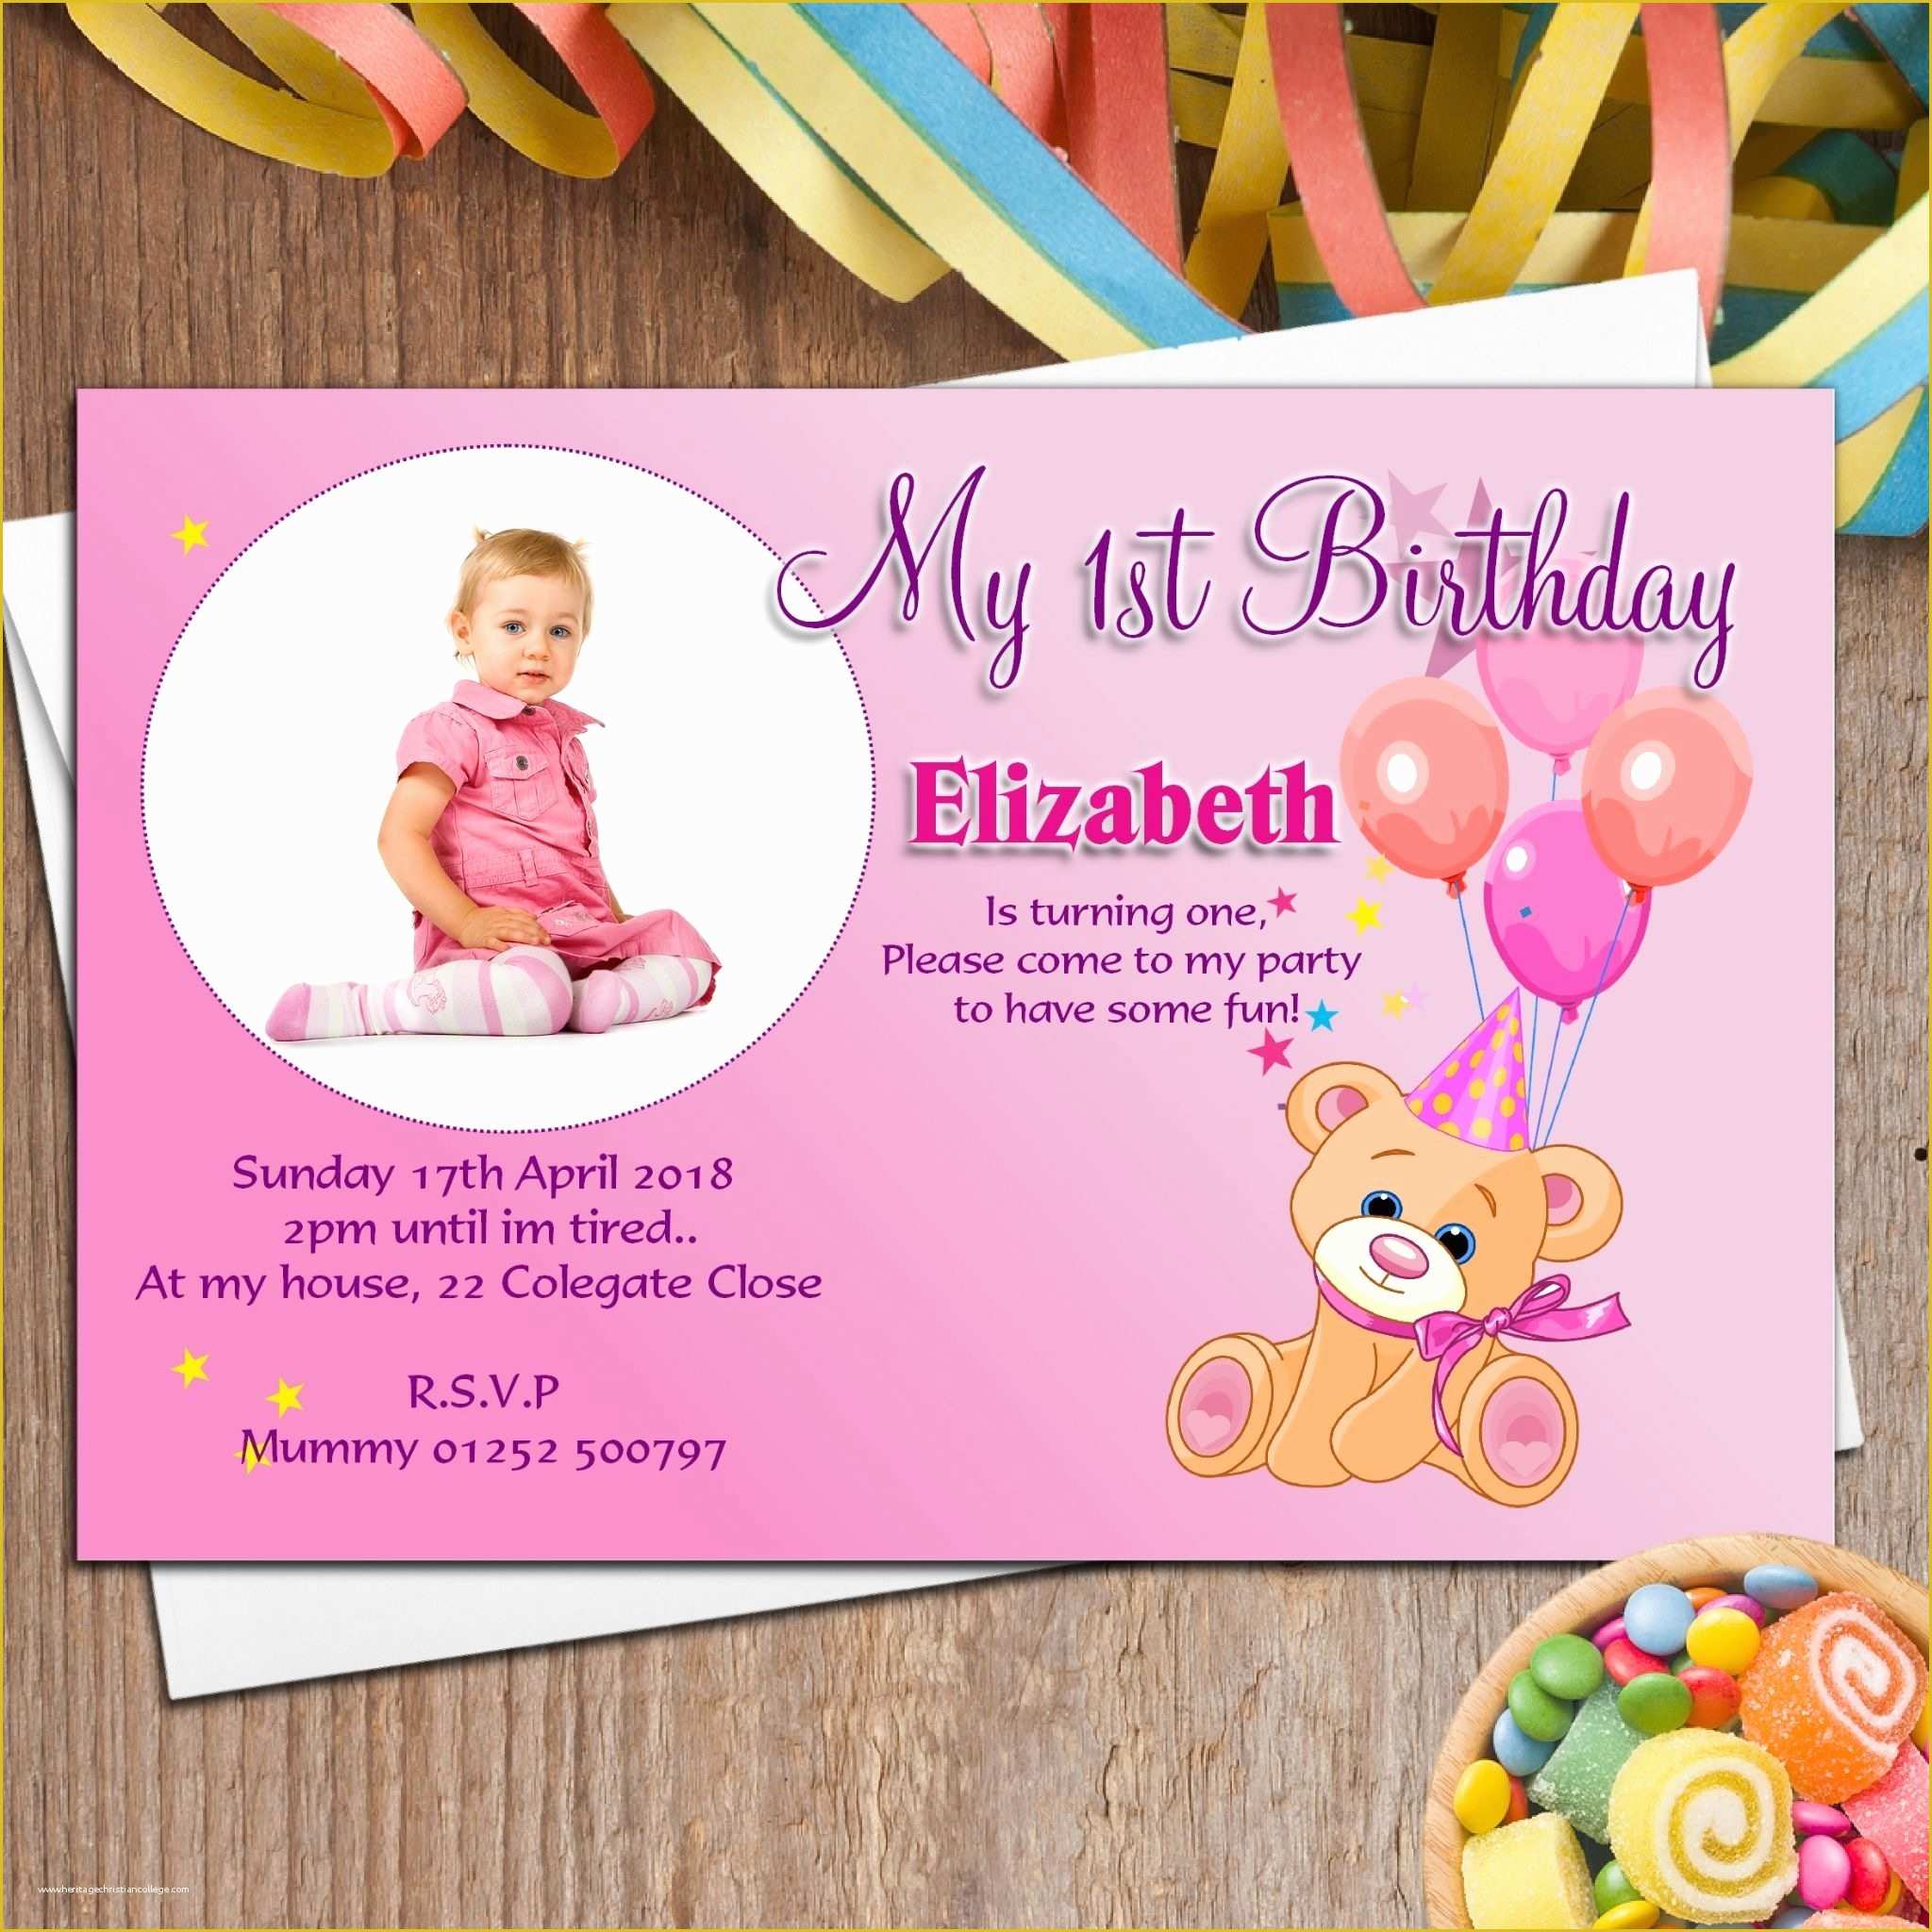 1st Birthday Invitation Template Free Download Of 1st Birthday Invitation Card Template Free Download 2018